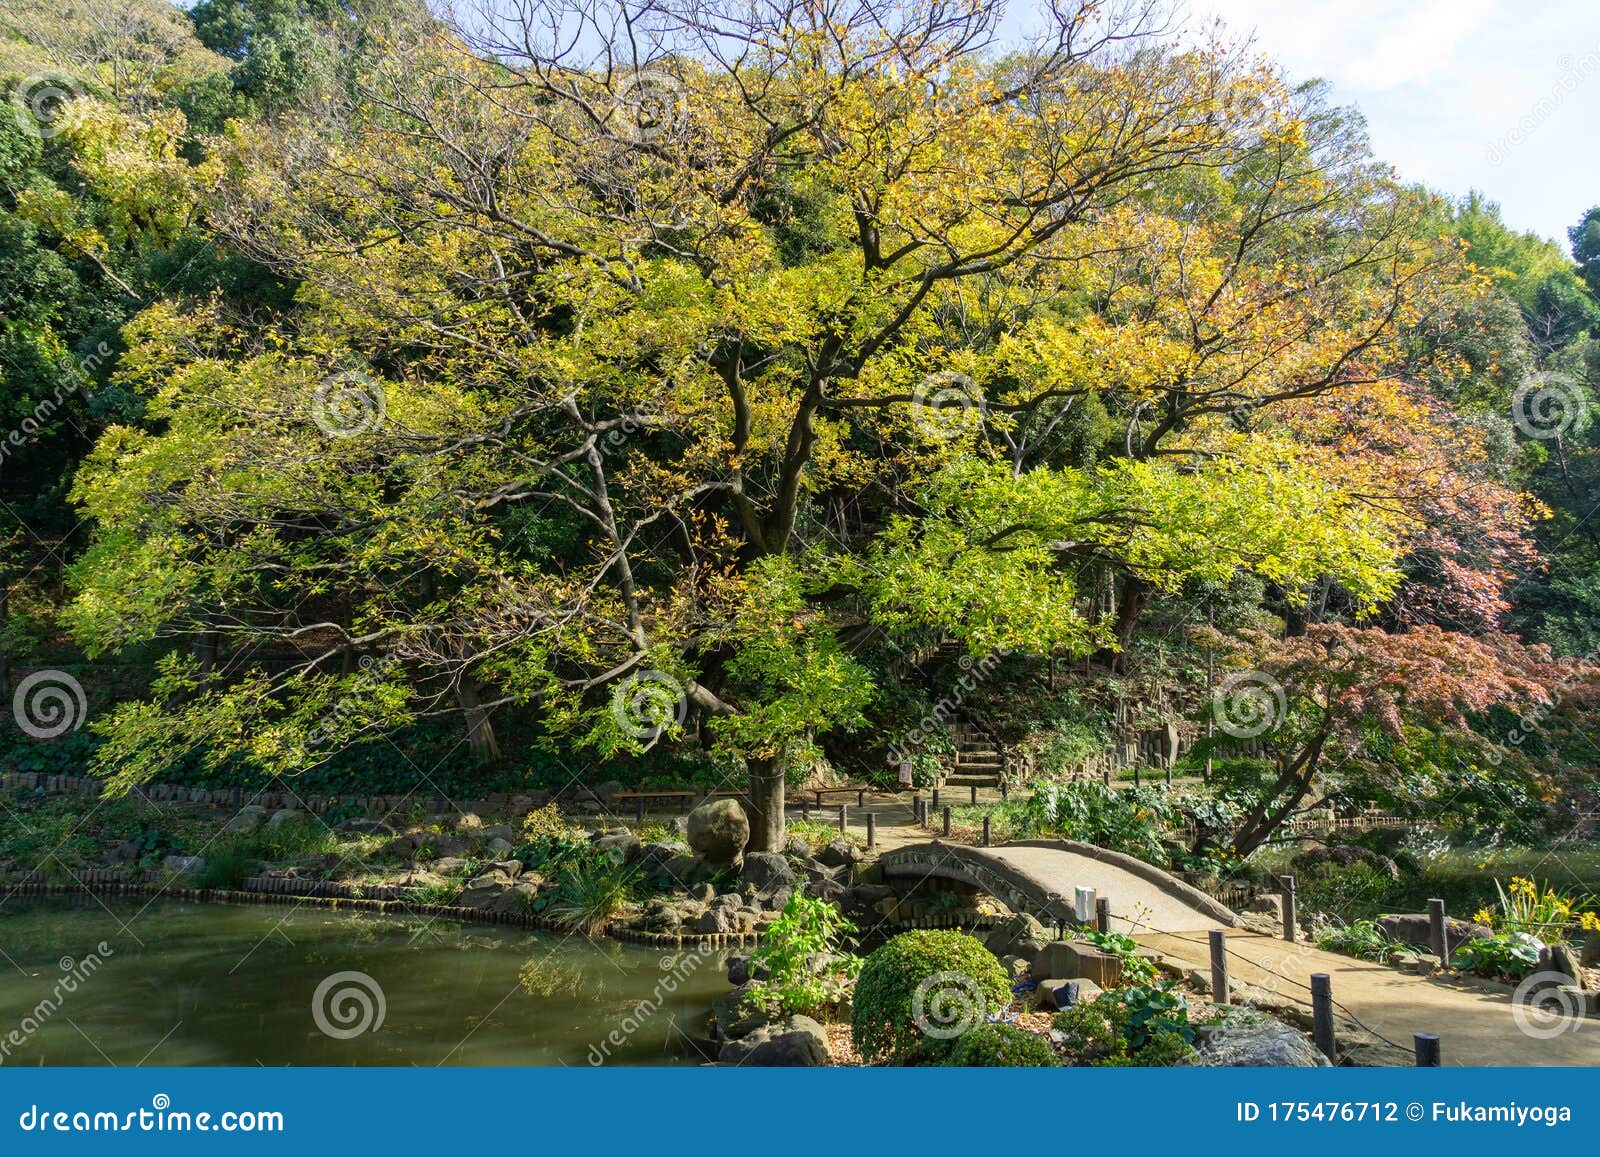 higo hosokawa garden in japan, tokyo landscape